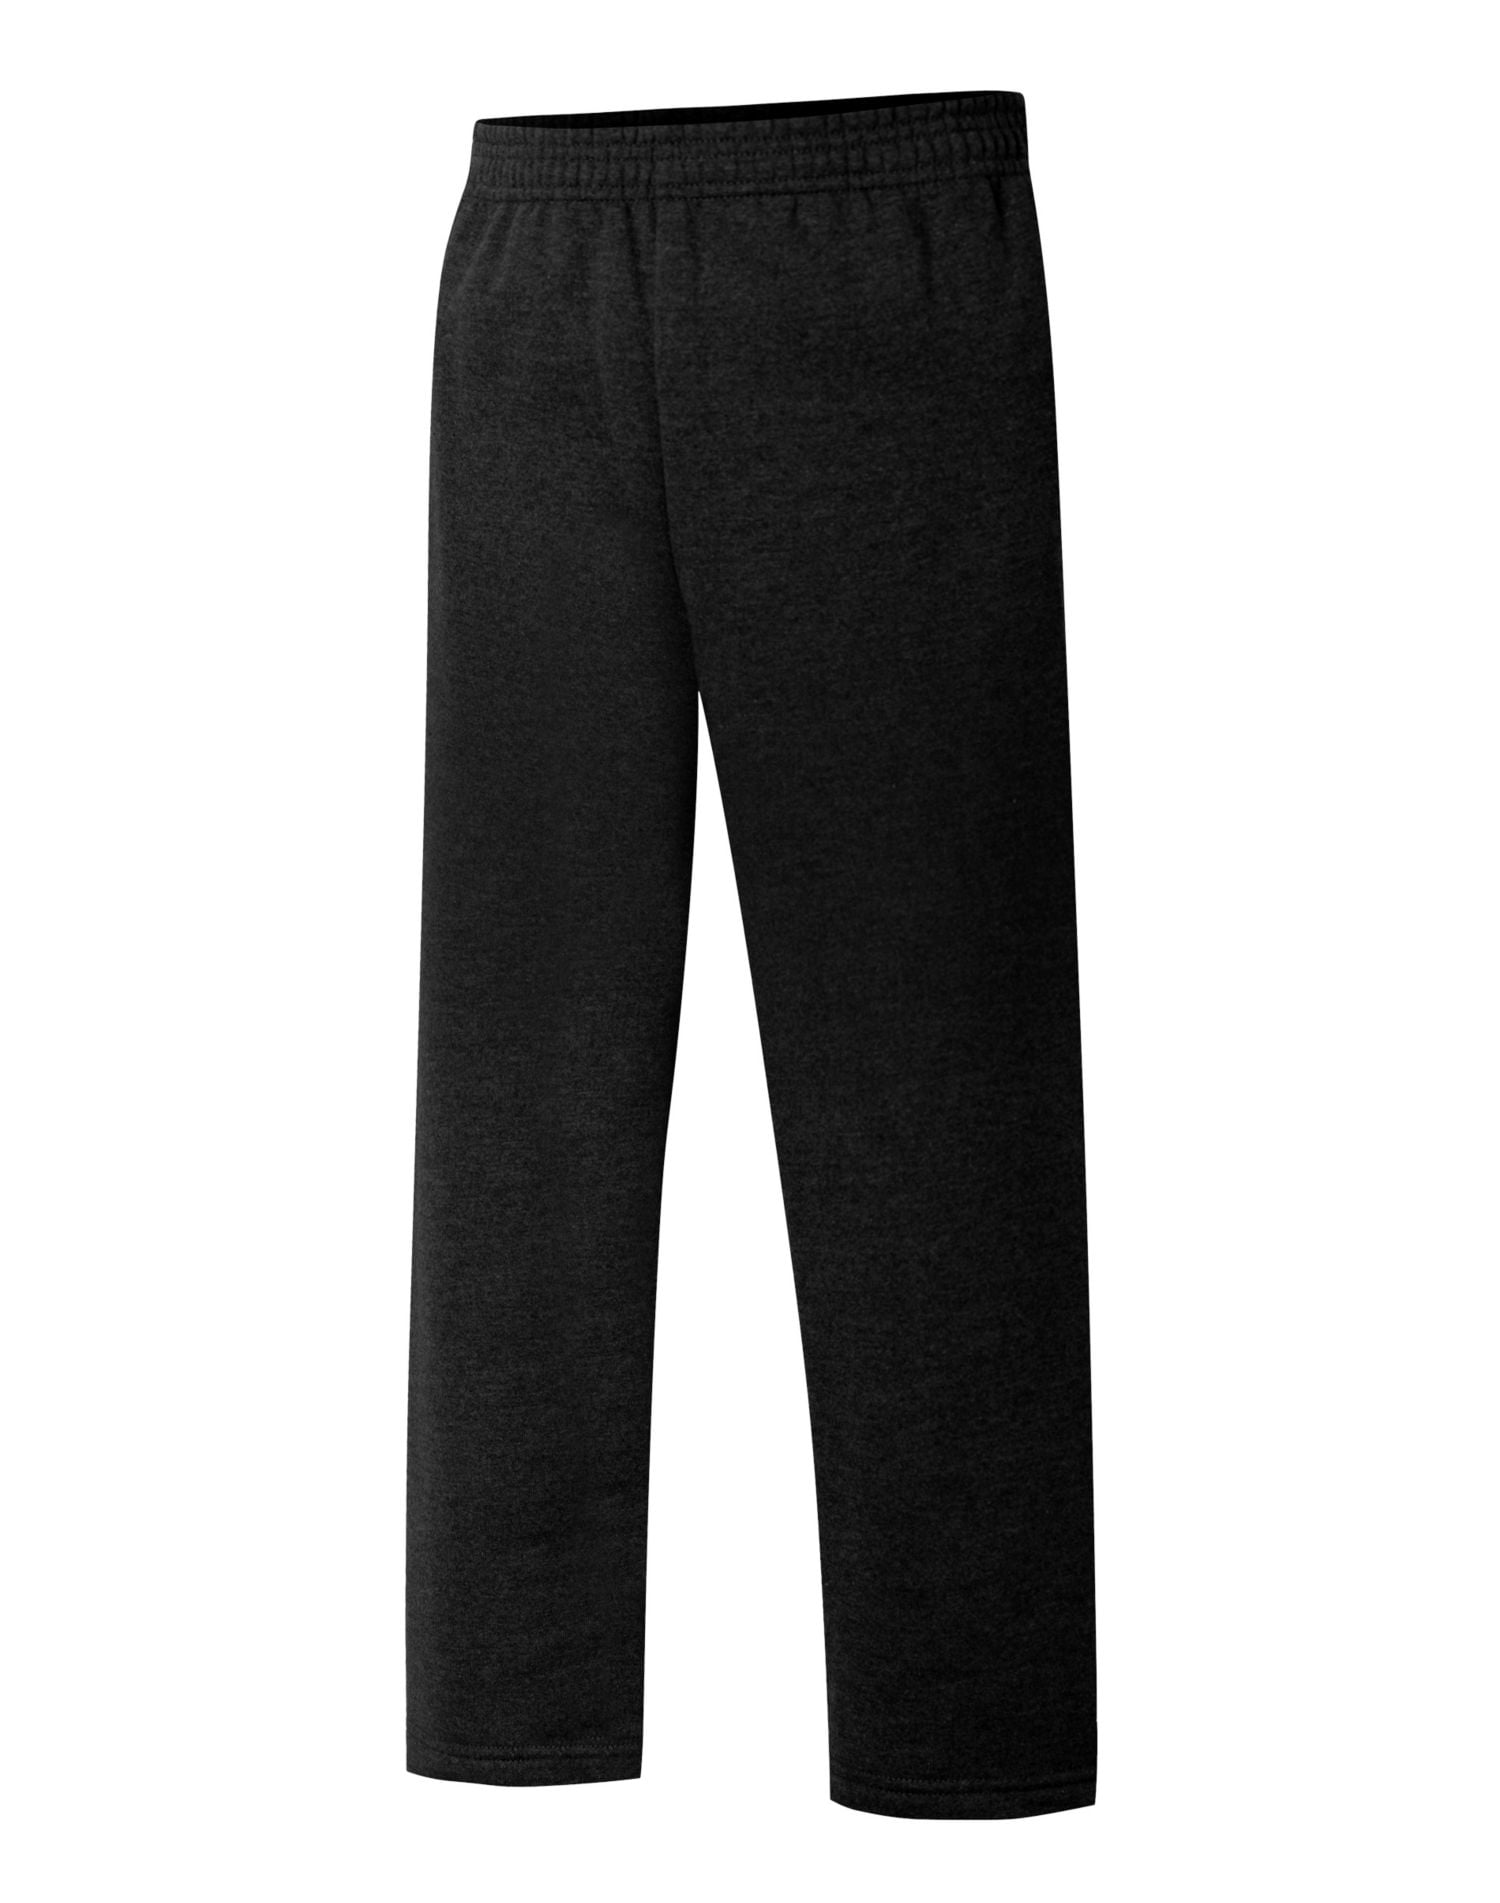 English Bulldog Vintage Soft/Cozy Sweatpants Youth Fleece Pants for Teenager Girls 